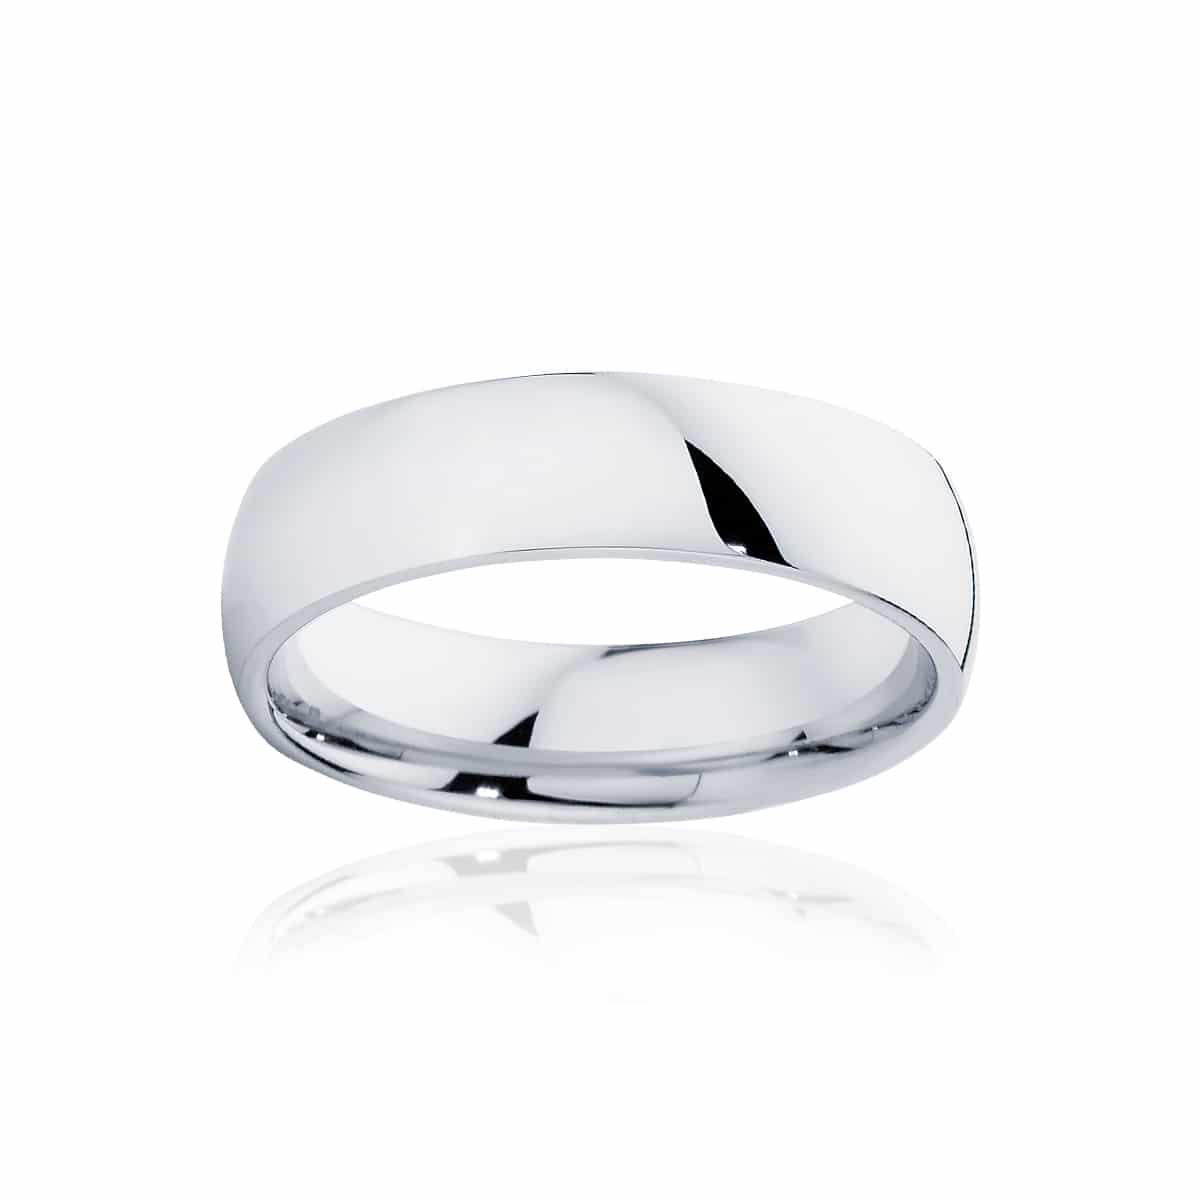 Buy Bridal Rings, Engagement Rings and Wedding Band Online - Surat Diamond